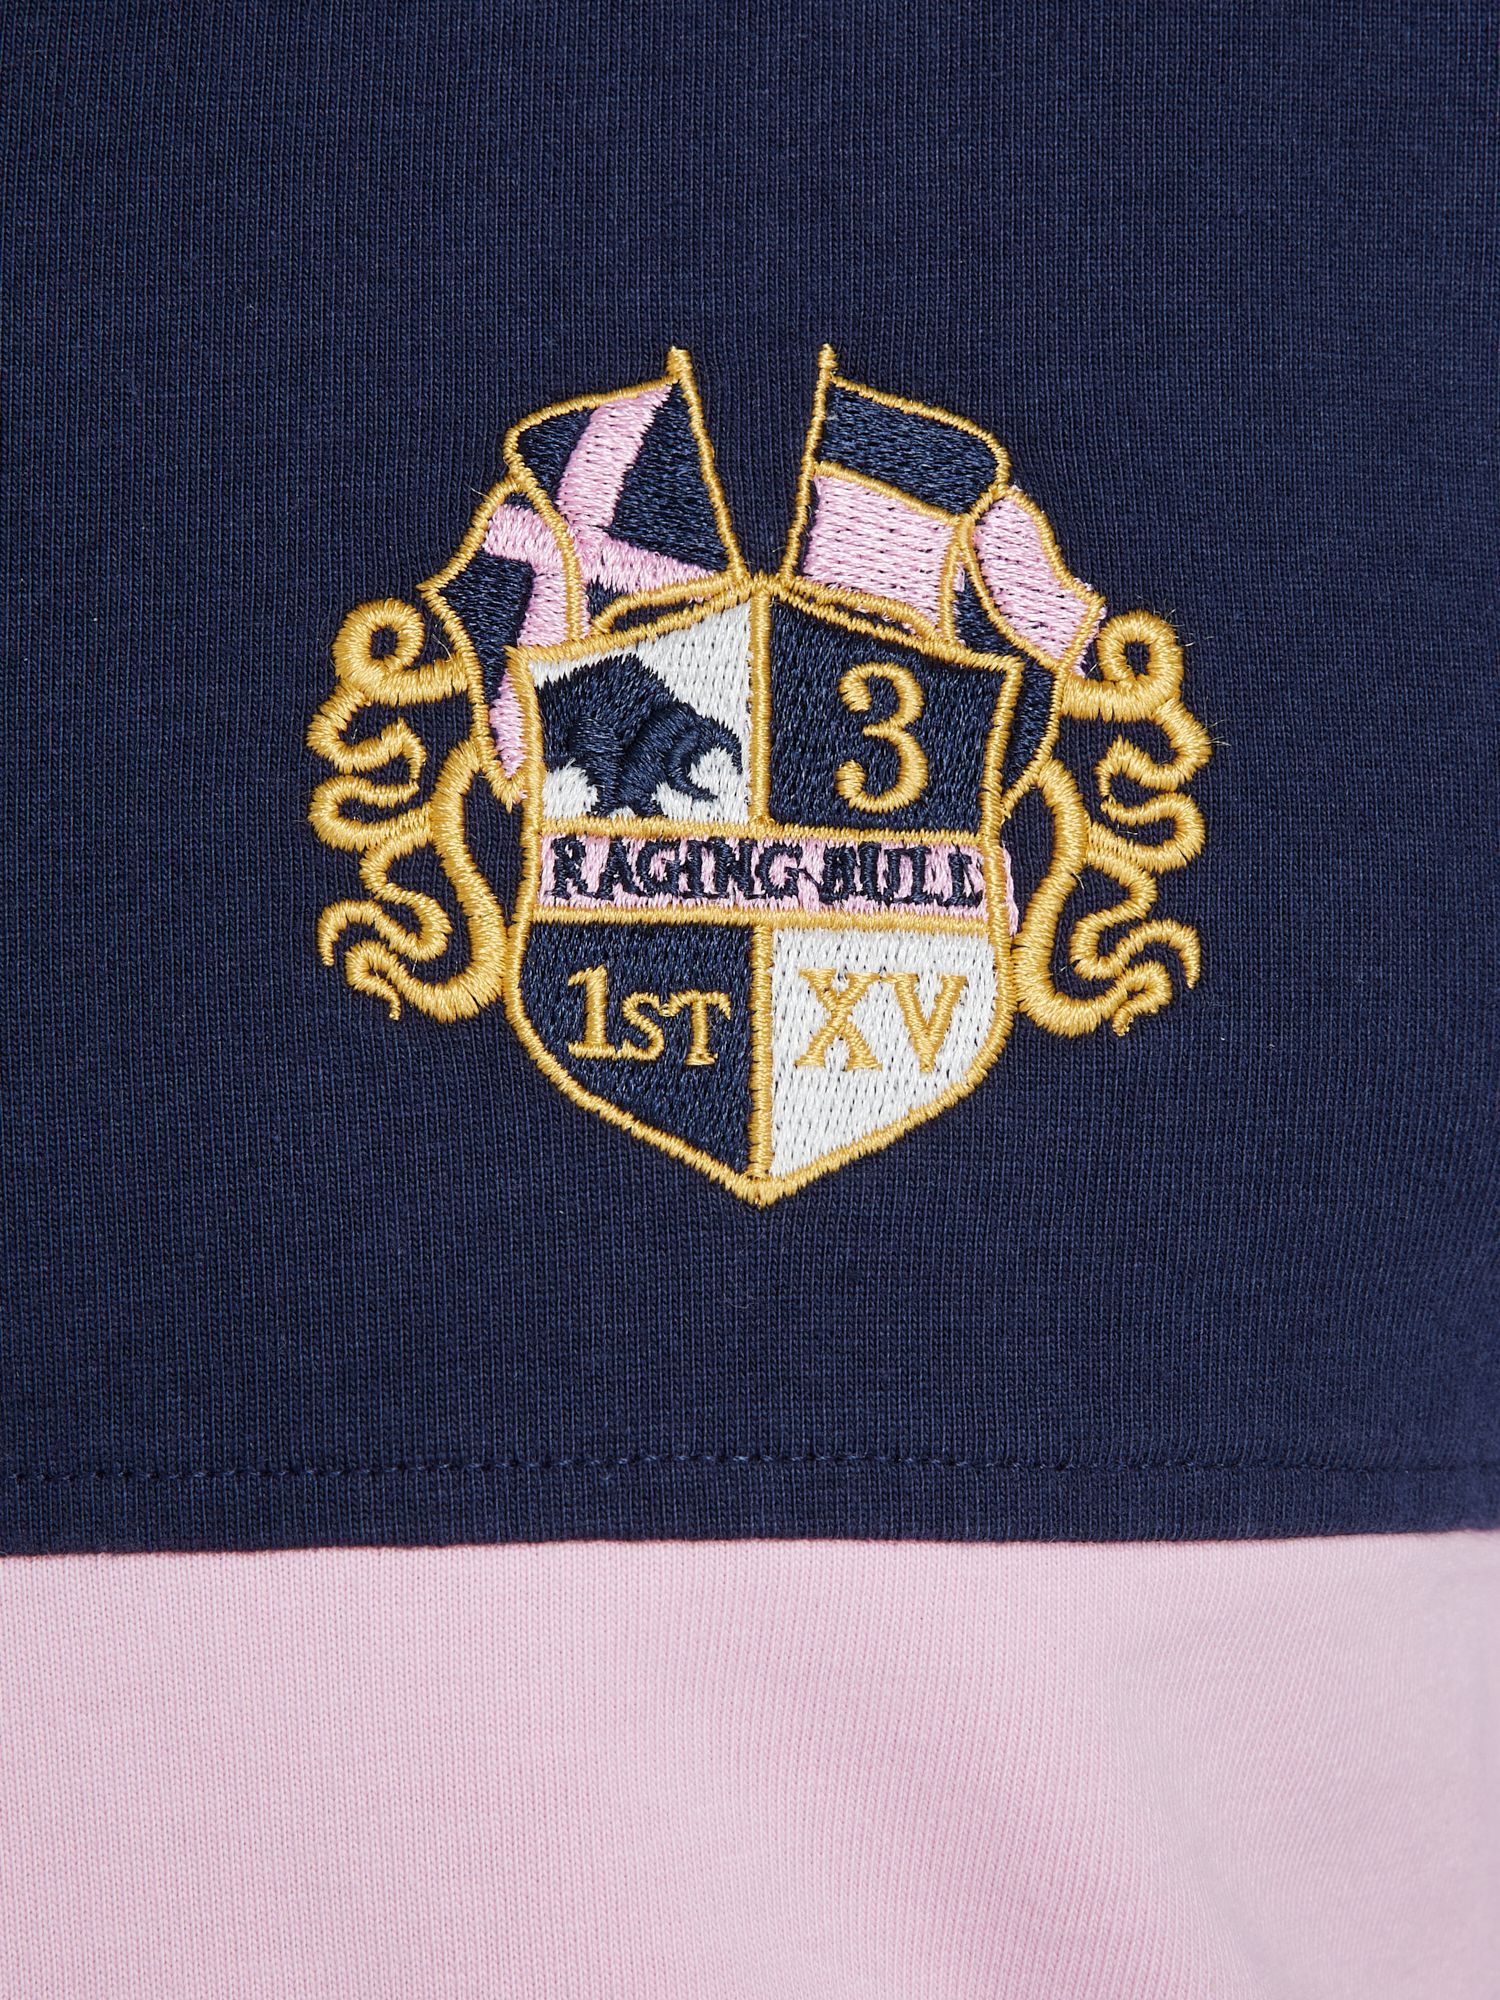 Raging Bull Short Sleeve Cut & Sew Panel Rugby Shirt, Navy/Multi, XXXL